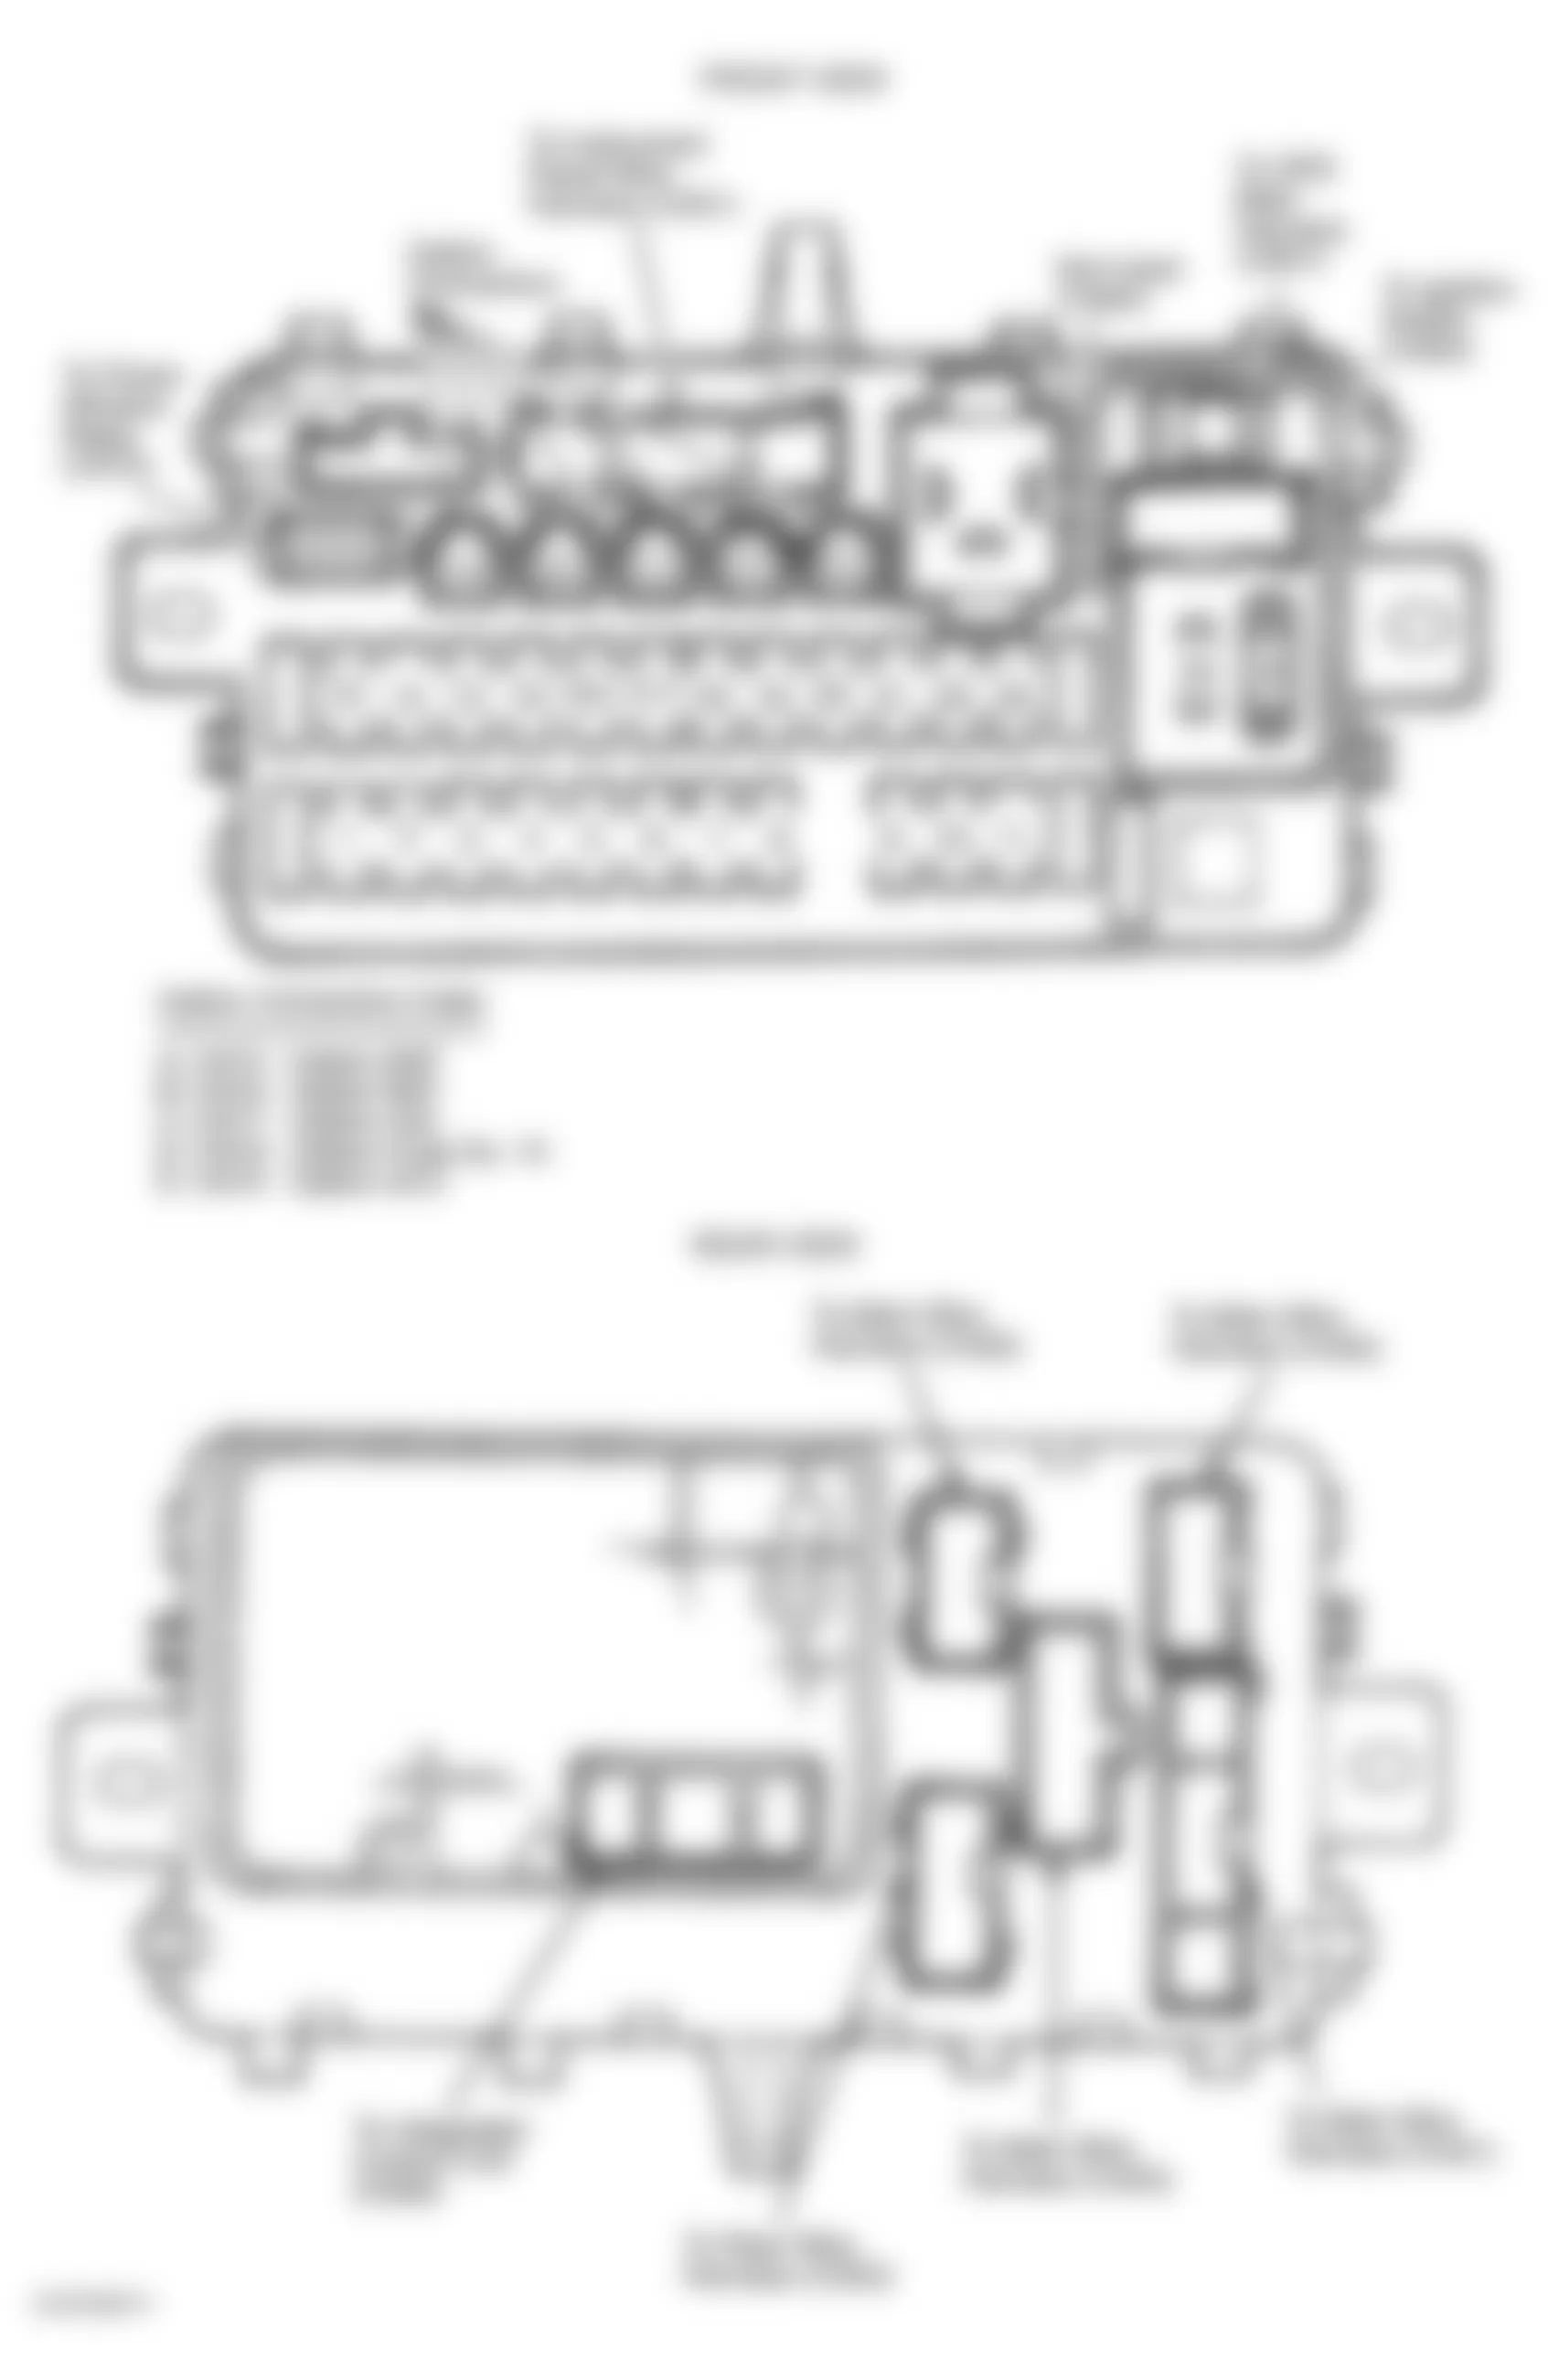 Honda Civic DX 1993 - Component Locations -  Identifying Under-Dash Fuse/Relay Box Components (1994-95 Civic Del Sol)